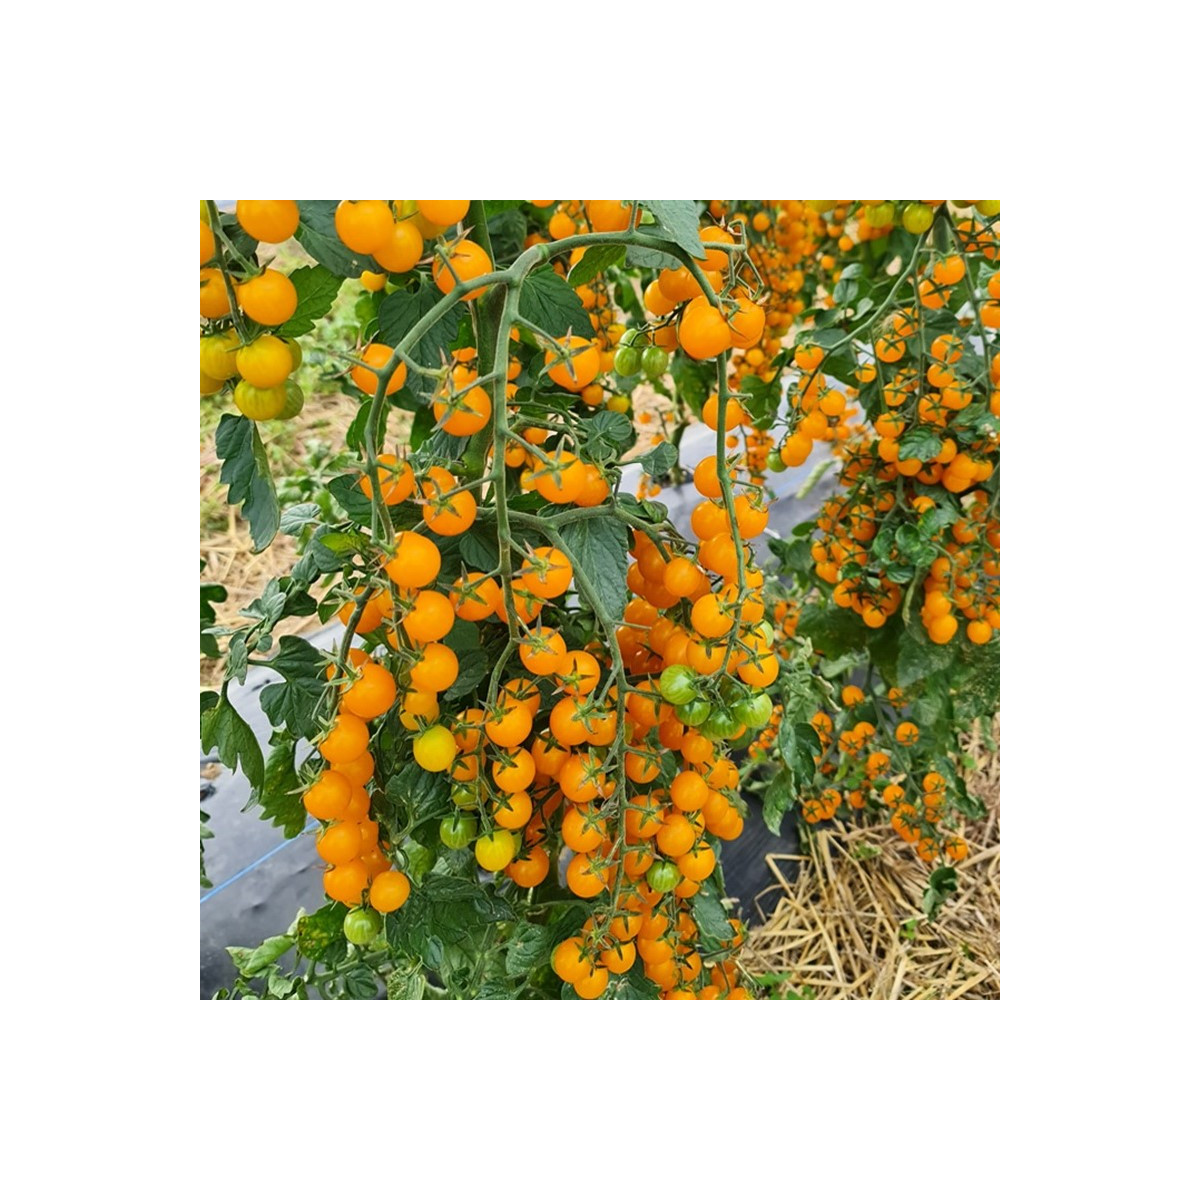 Rajče Perlino žluté F1 - Solanum lycopersicum - semena rajčete - 6 ks